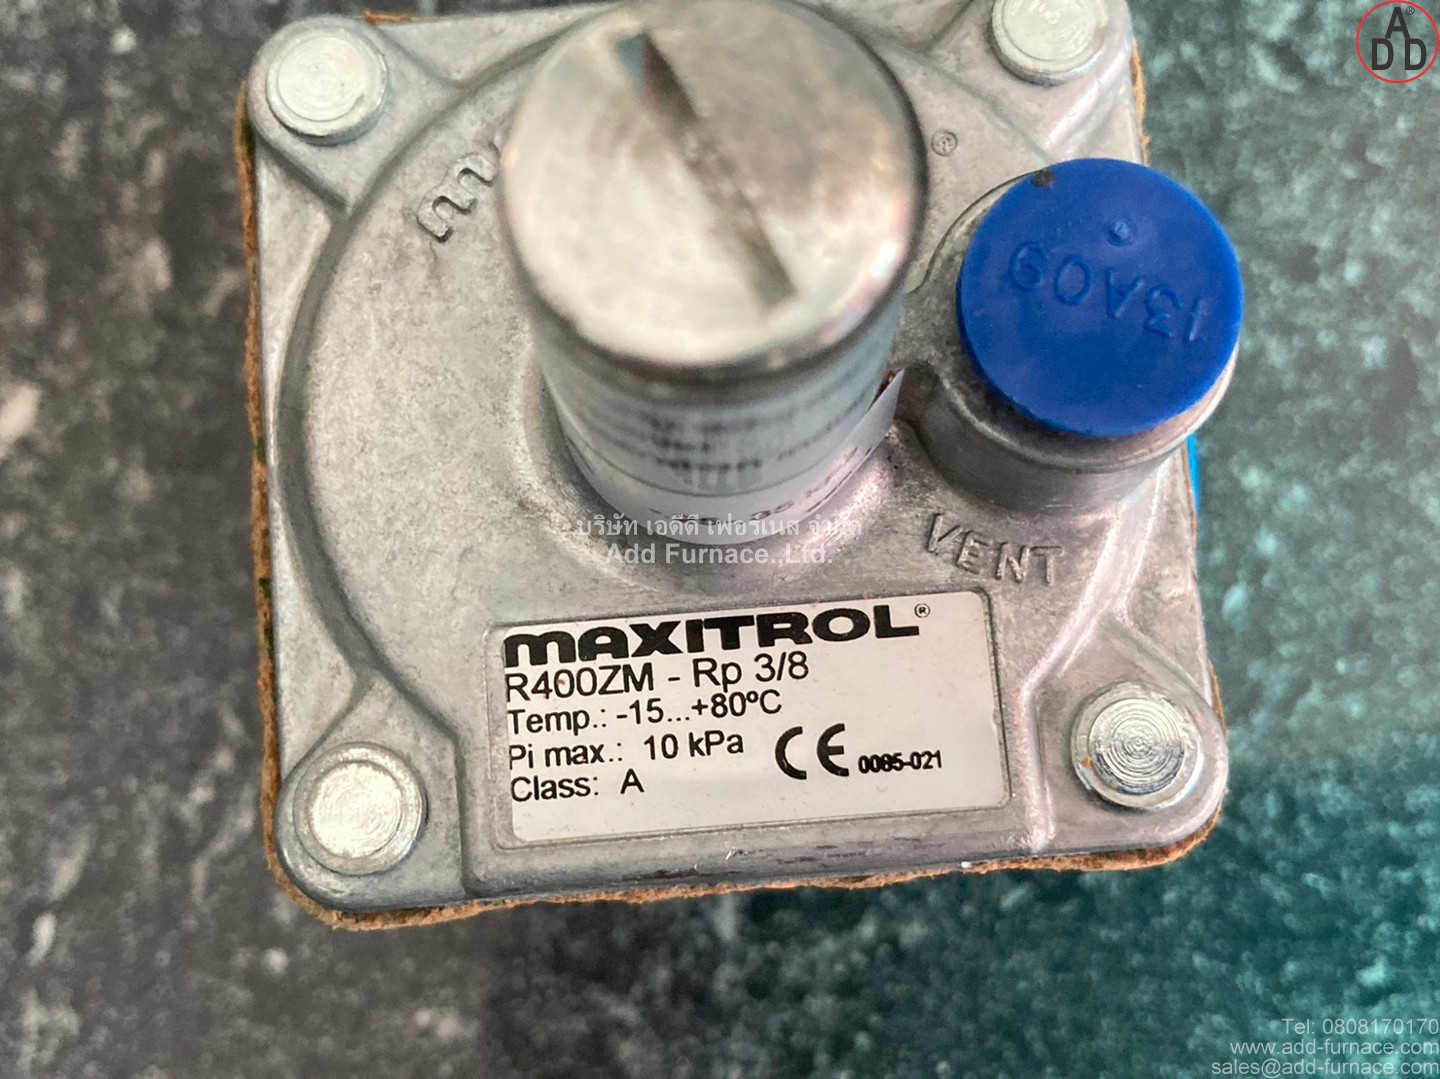 Maxitrol R400ZM - Rp3/8, 10kPa (9)